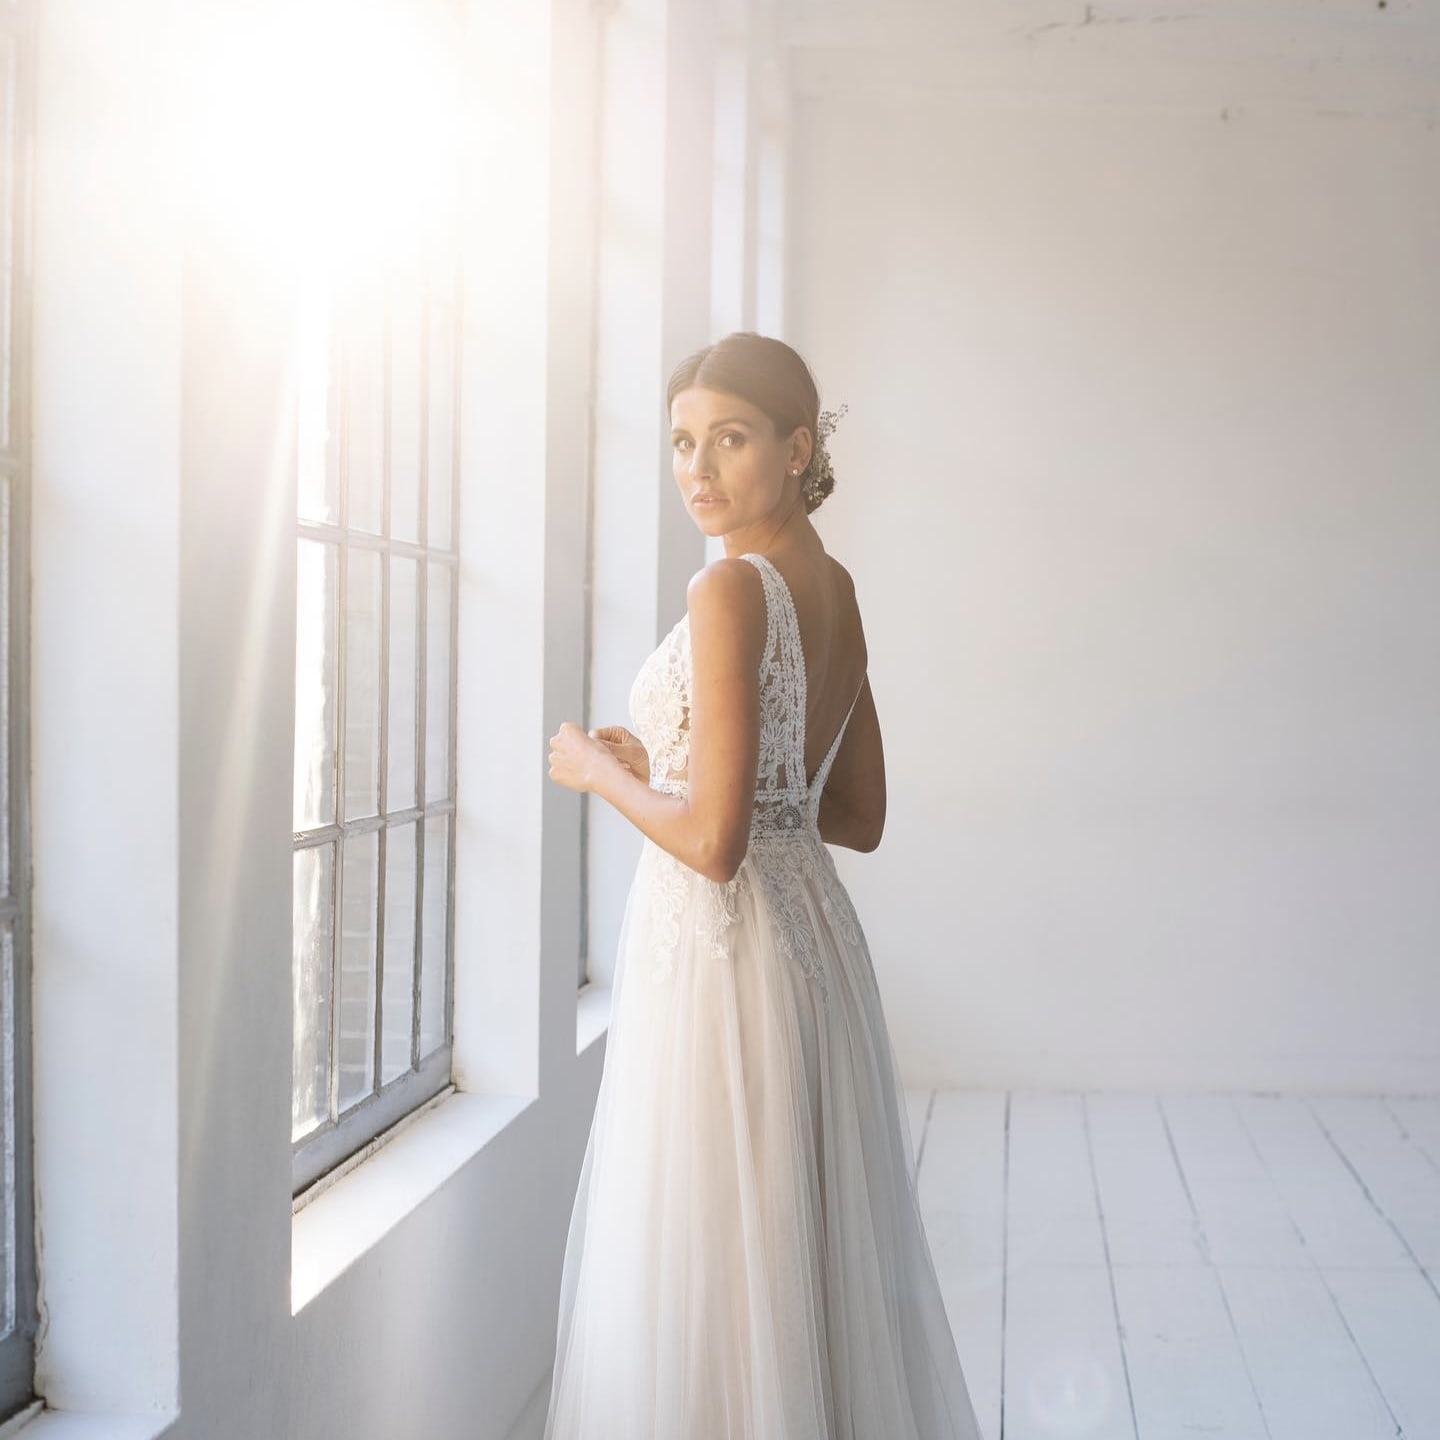 bride in window with low sun light